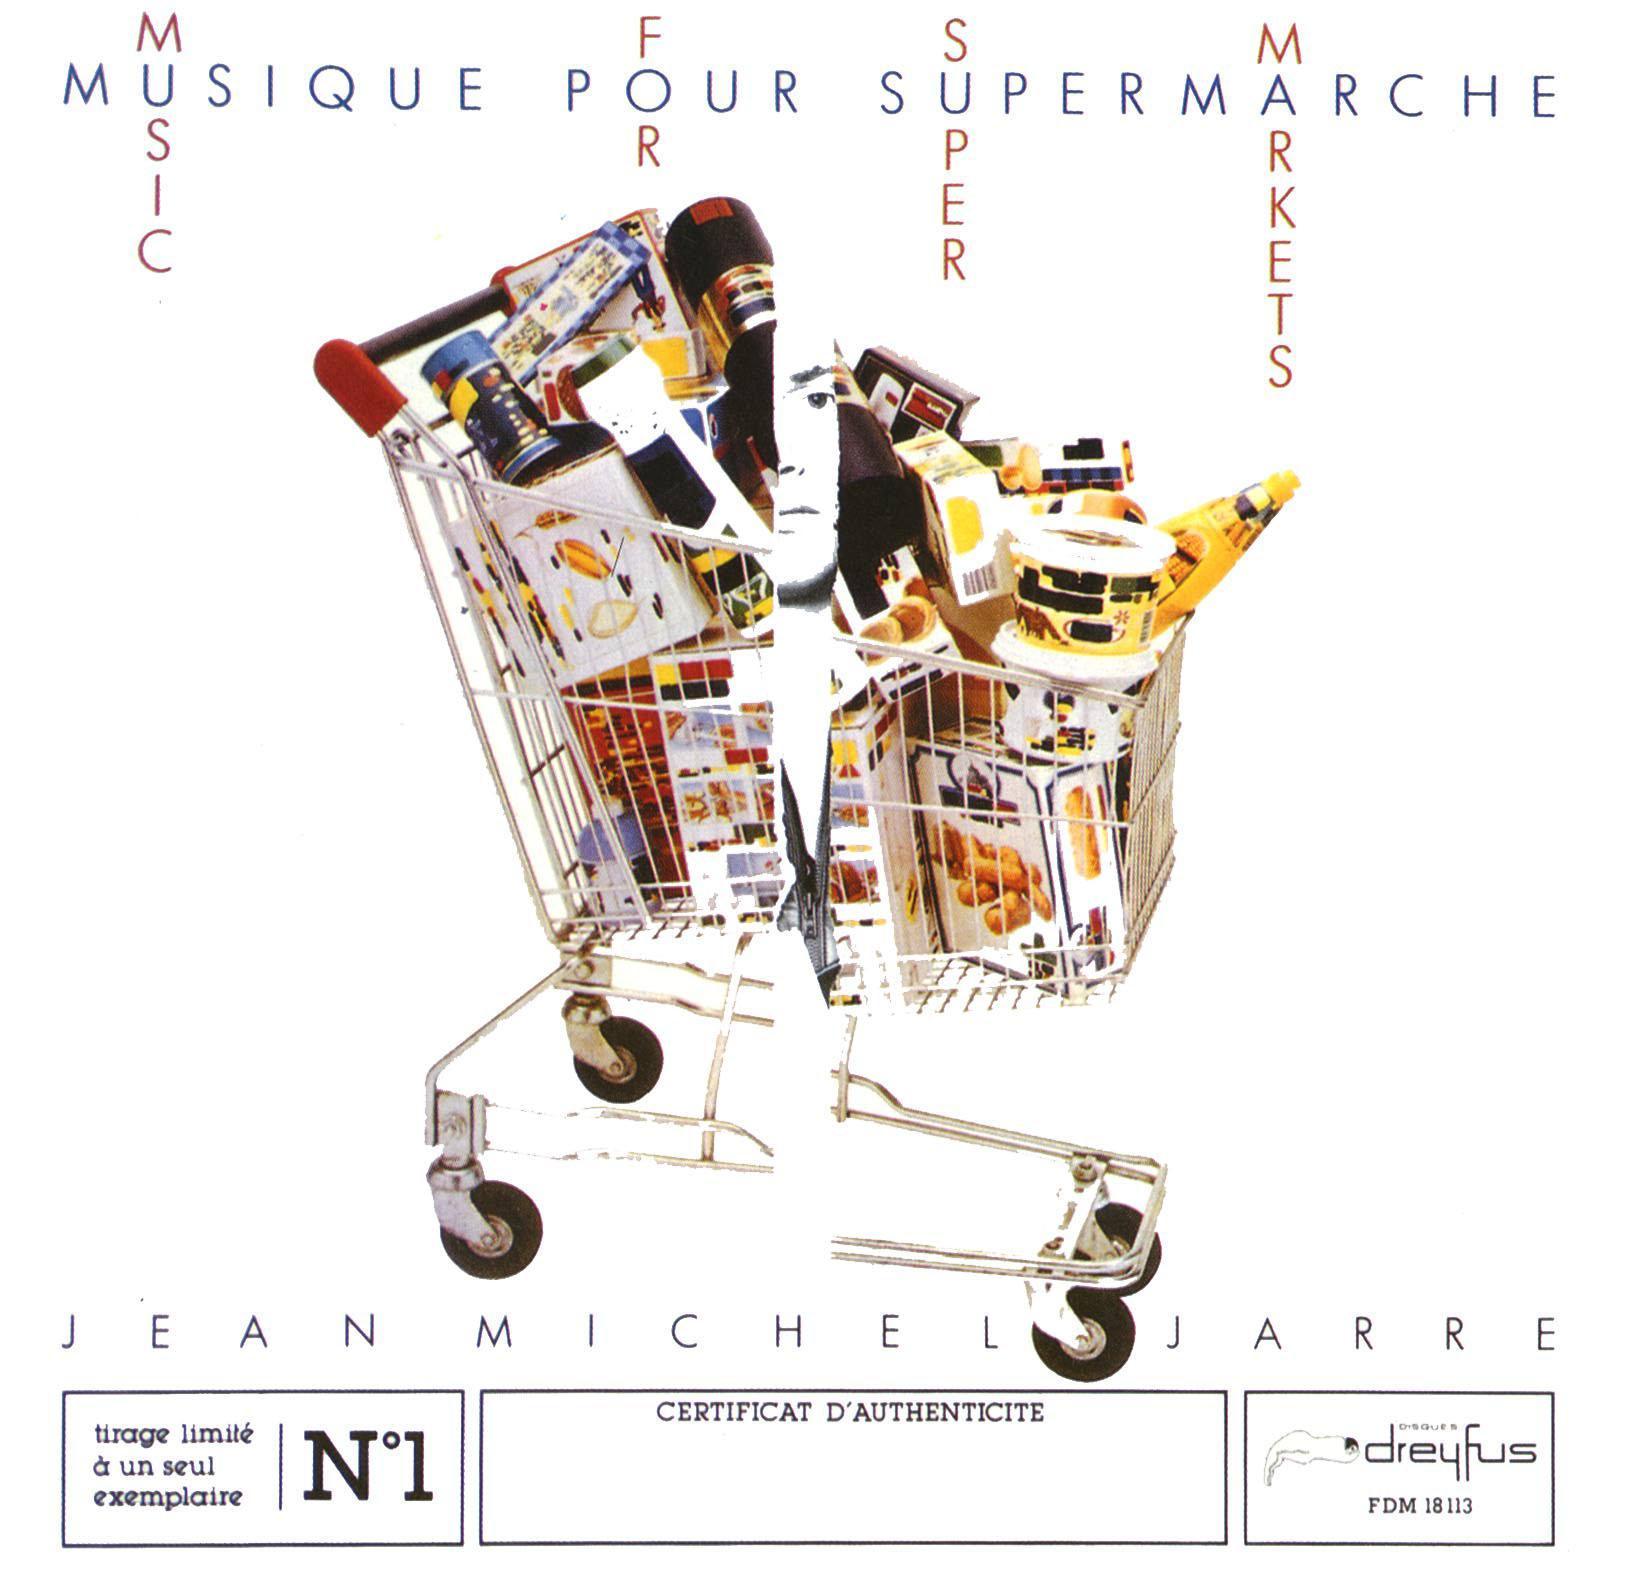 Jean Michel Jarre - Music For Supermarkets (1983)